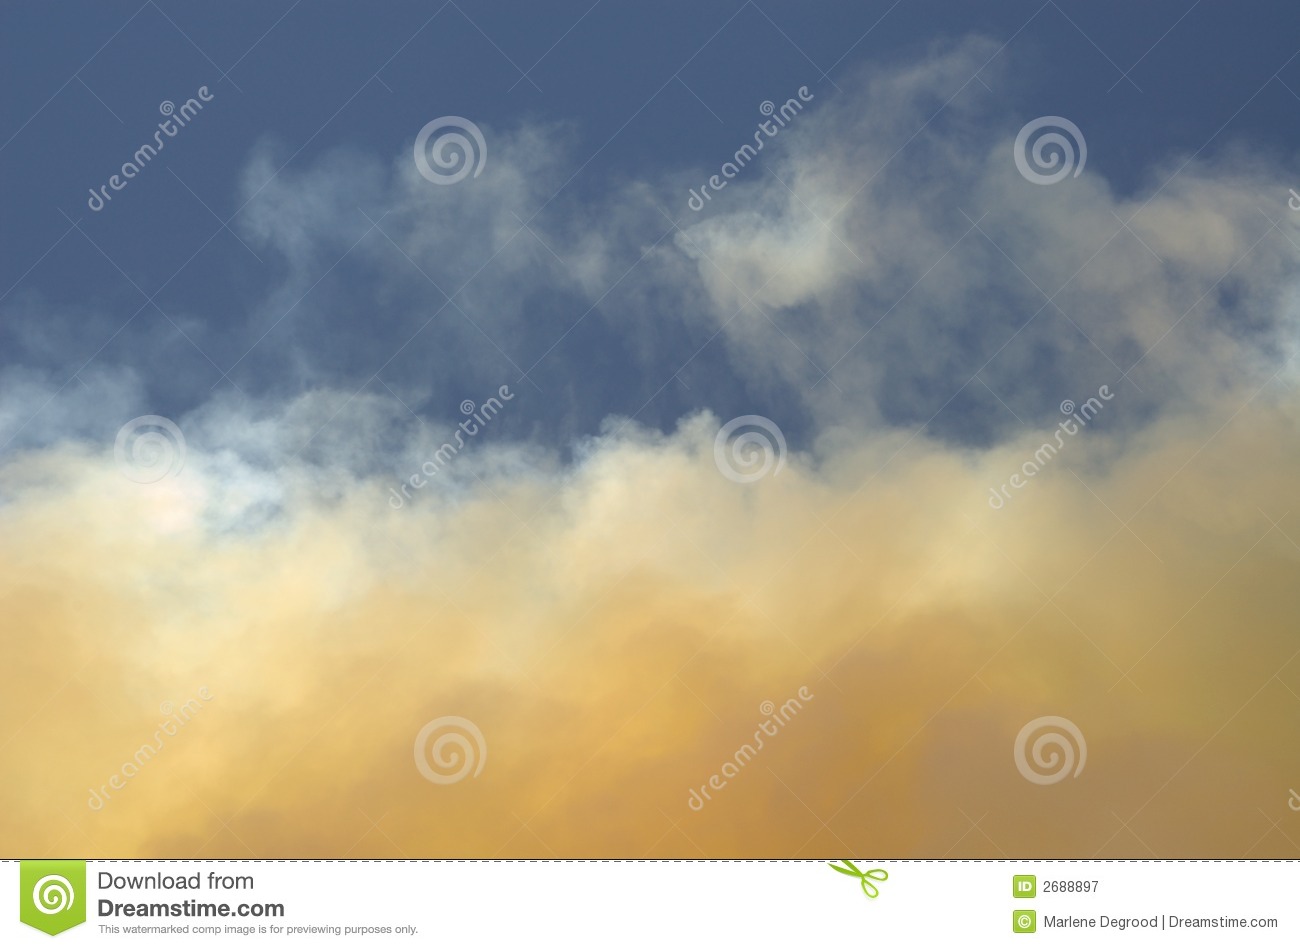 Smoke Cloud Plume 2 Royalty Free Stock Photography   Image  2688897